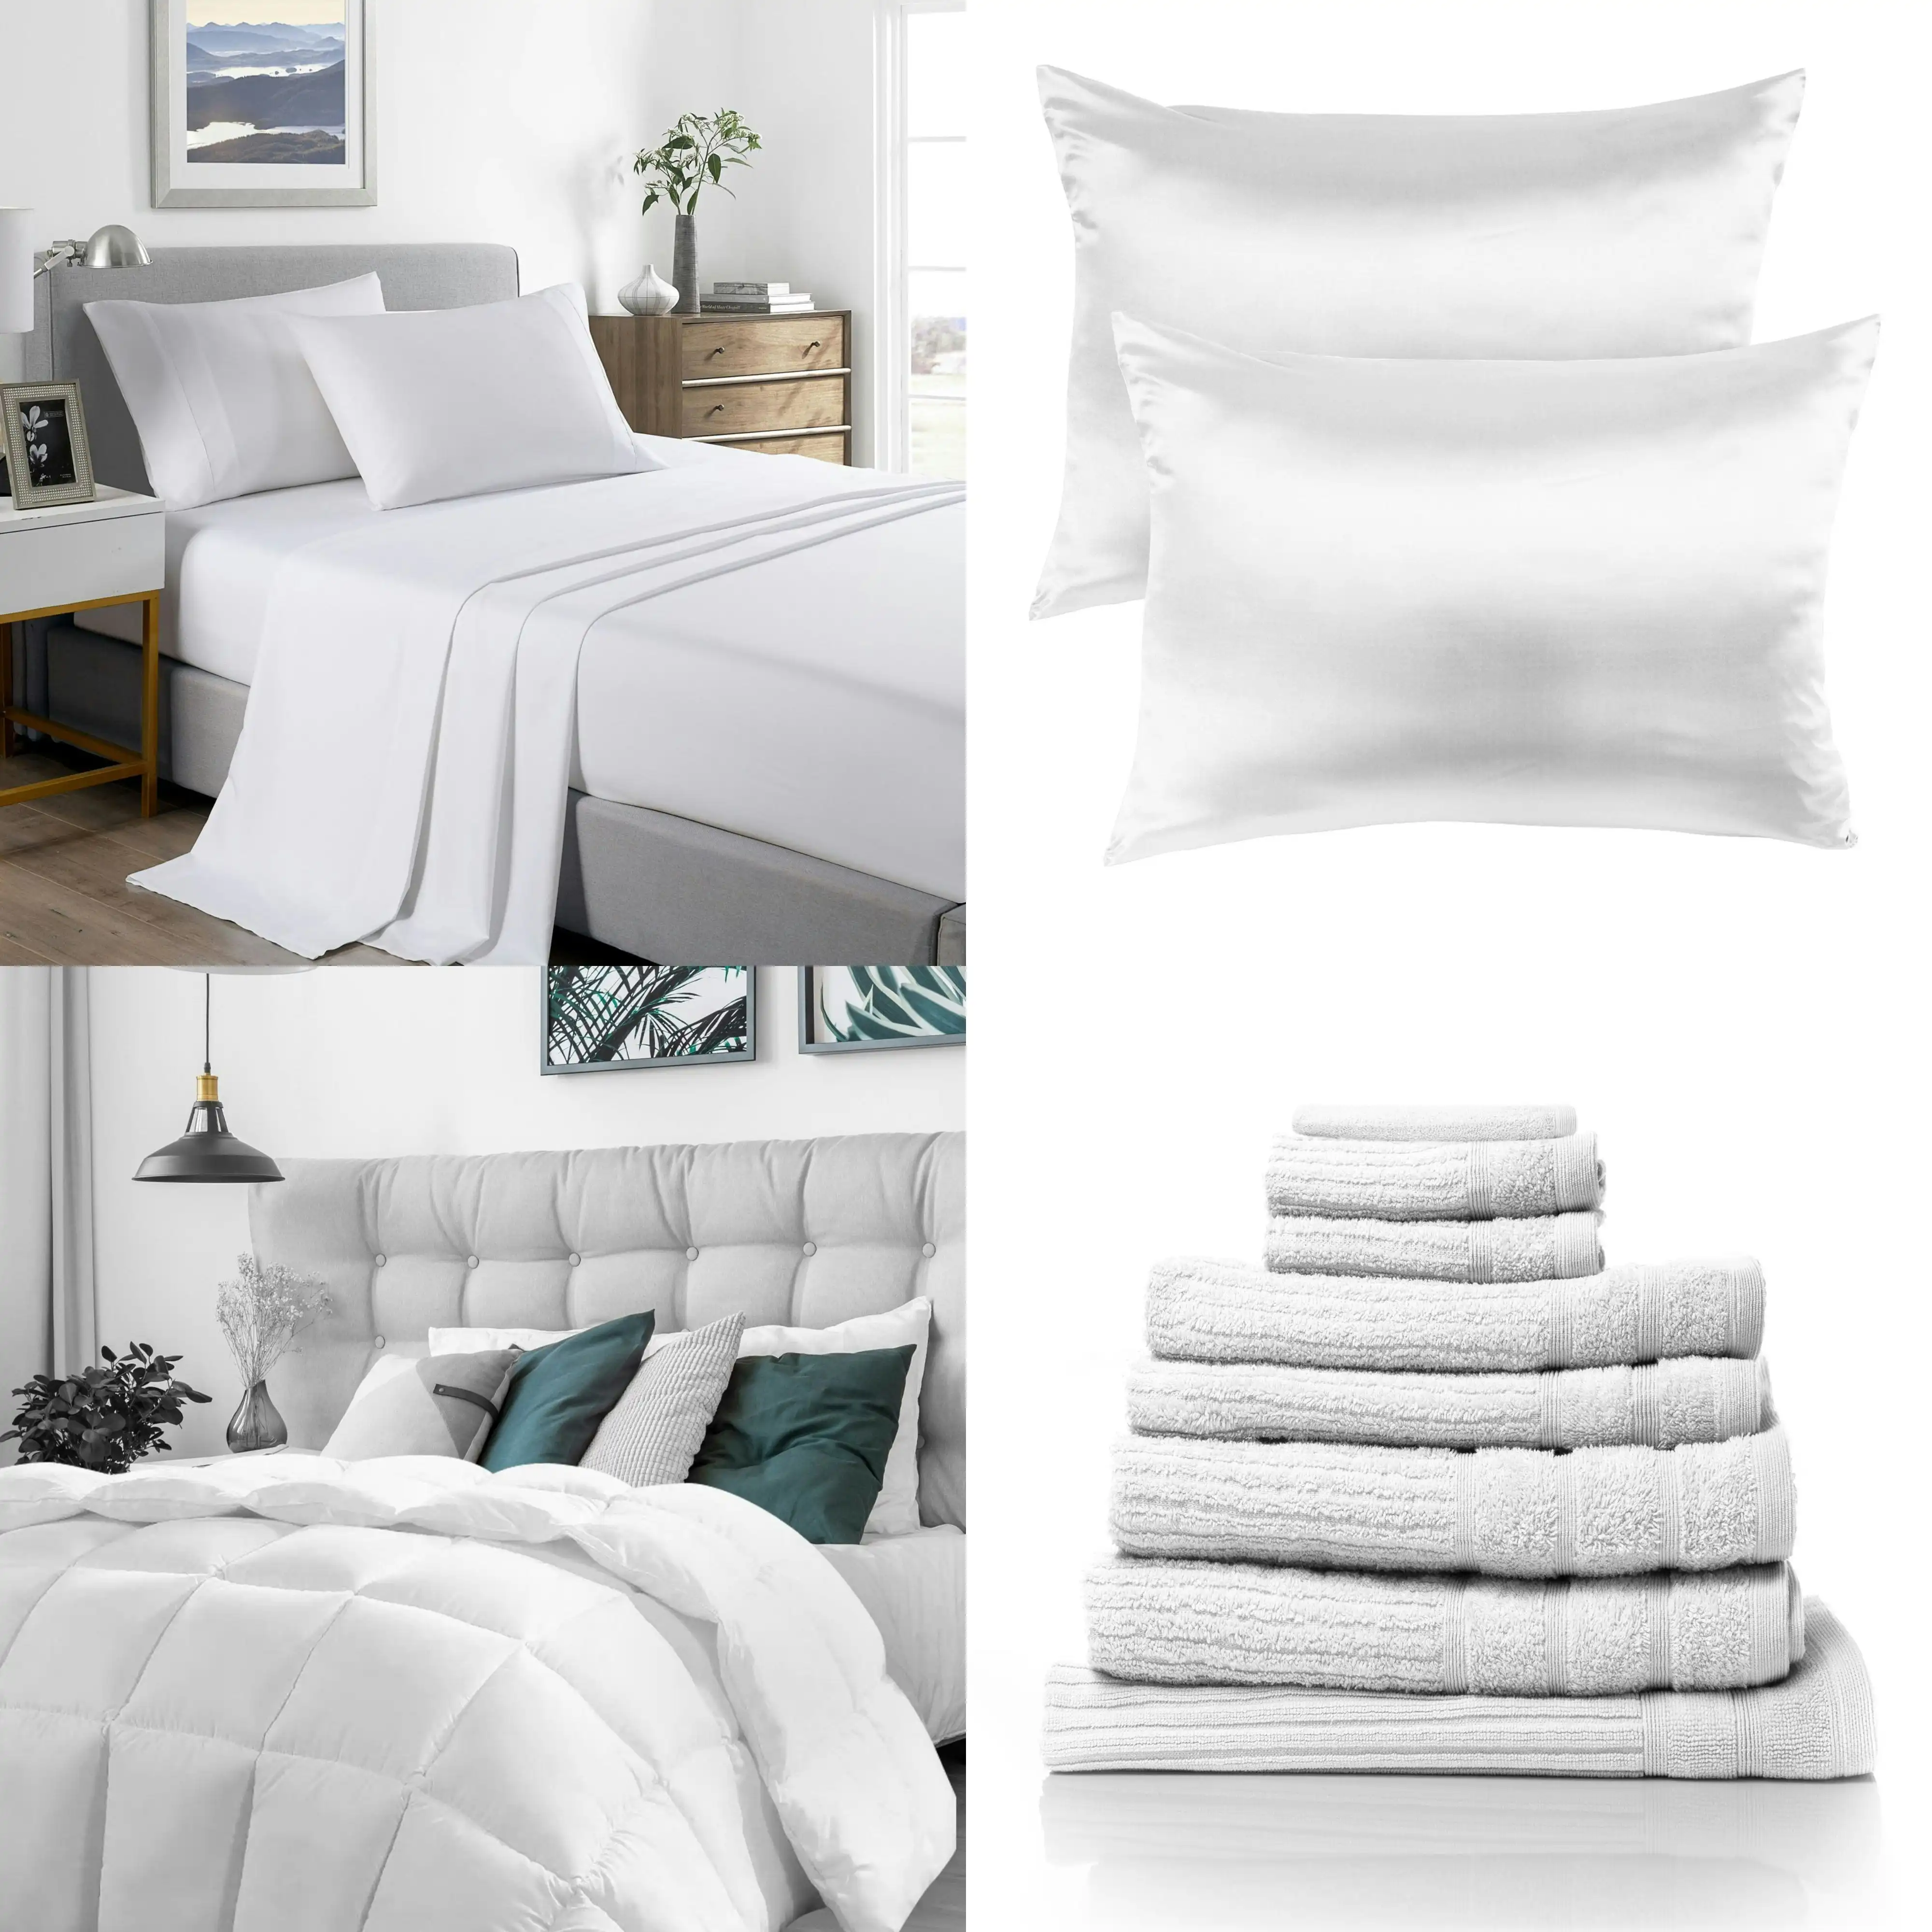 Complete Bedroom Bedding Manchester Set - Queen - White